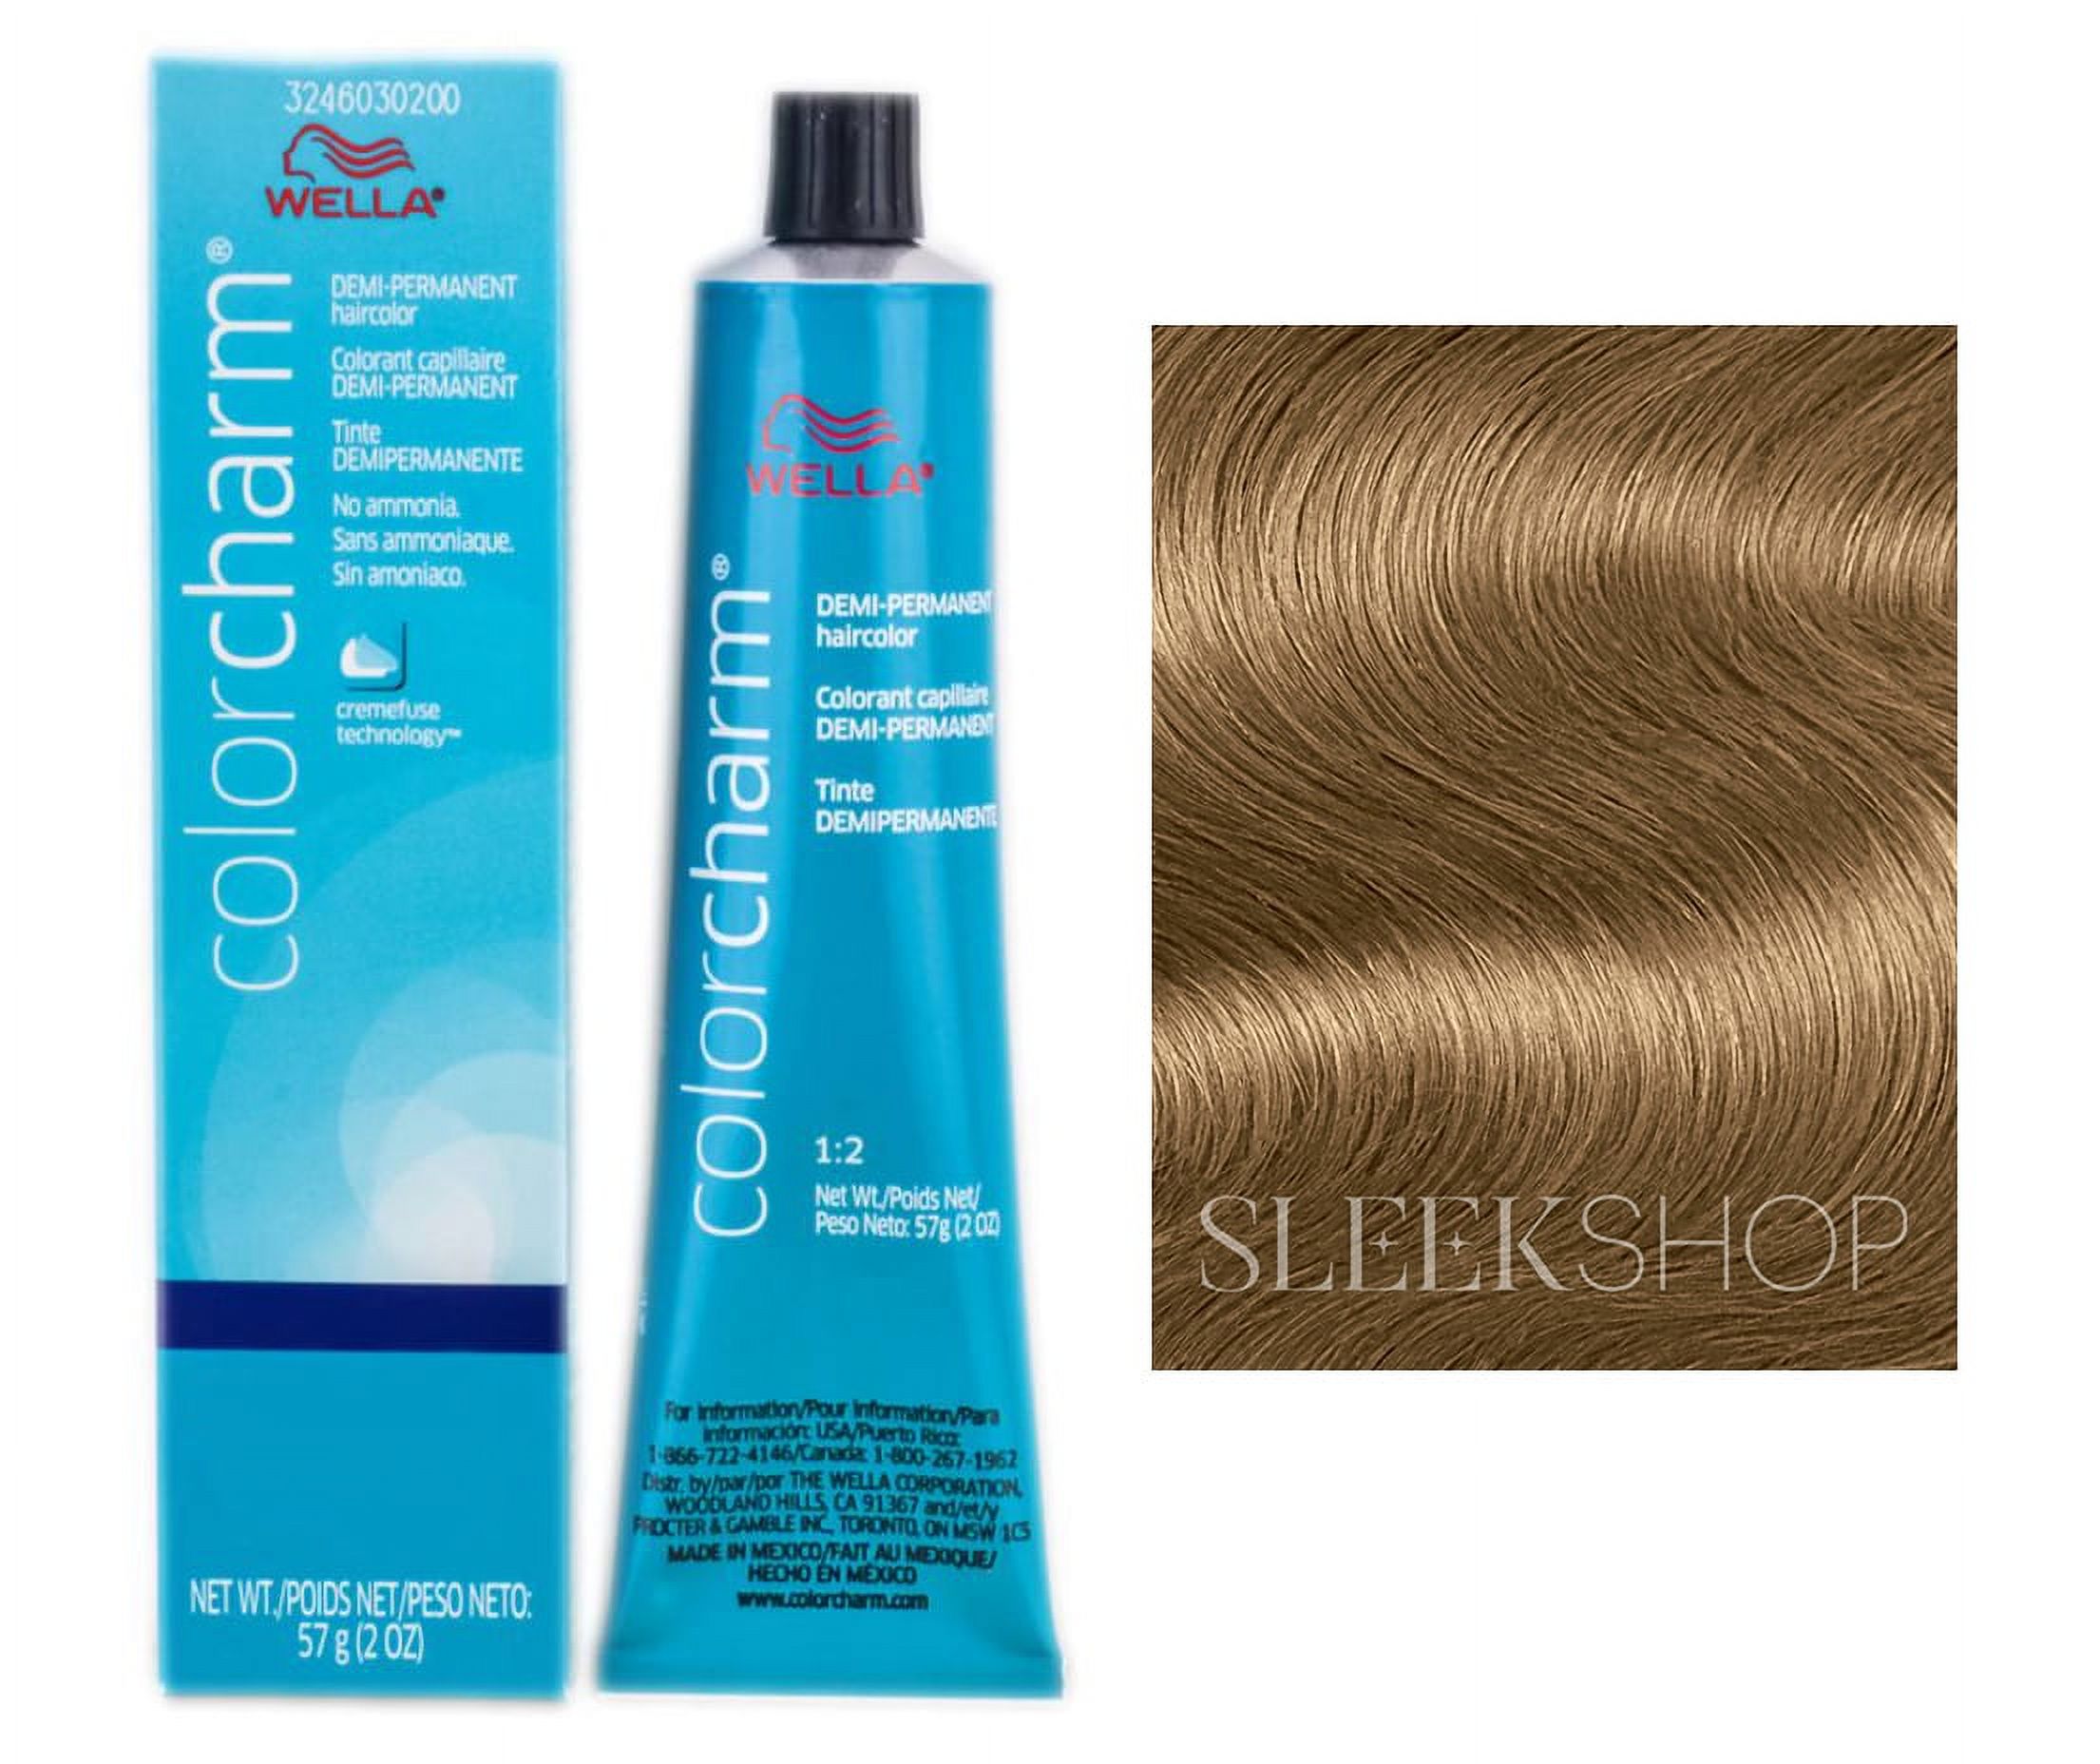 Wella COLOR CHARM, HAIR COLOR Demi-Permanent Haircolor - Color : #8A(8/1)LIGHT ASH BLONDE - image 1 of 3